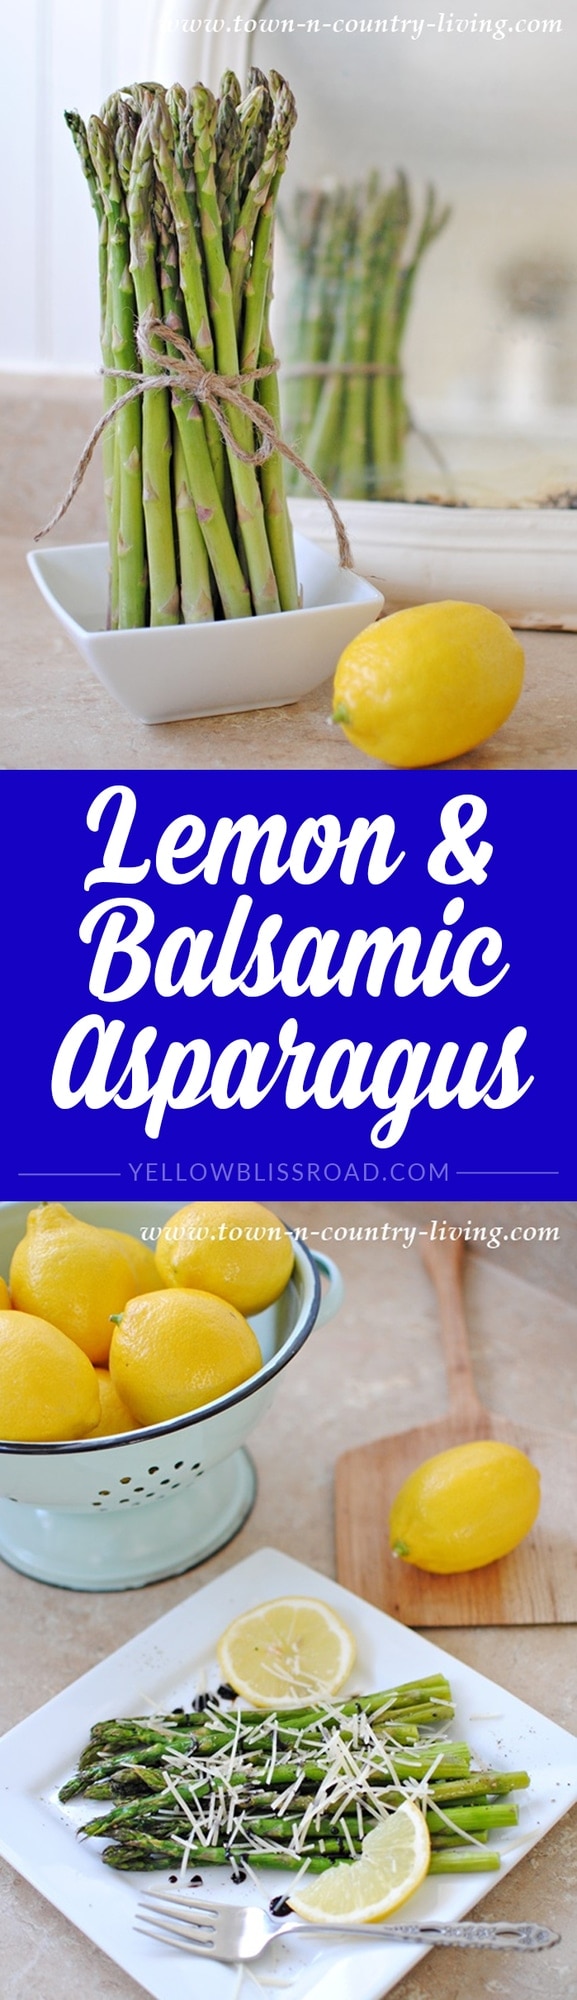 Roasted Lemon & Balsamic Asparagus with Parmesan